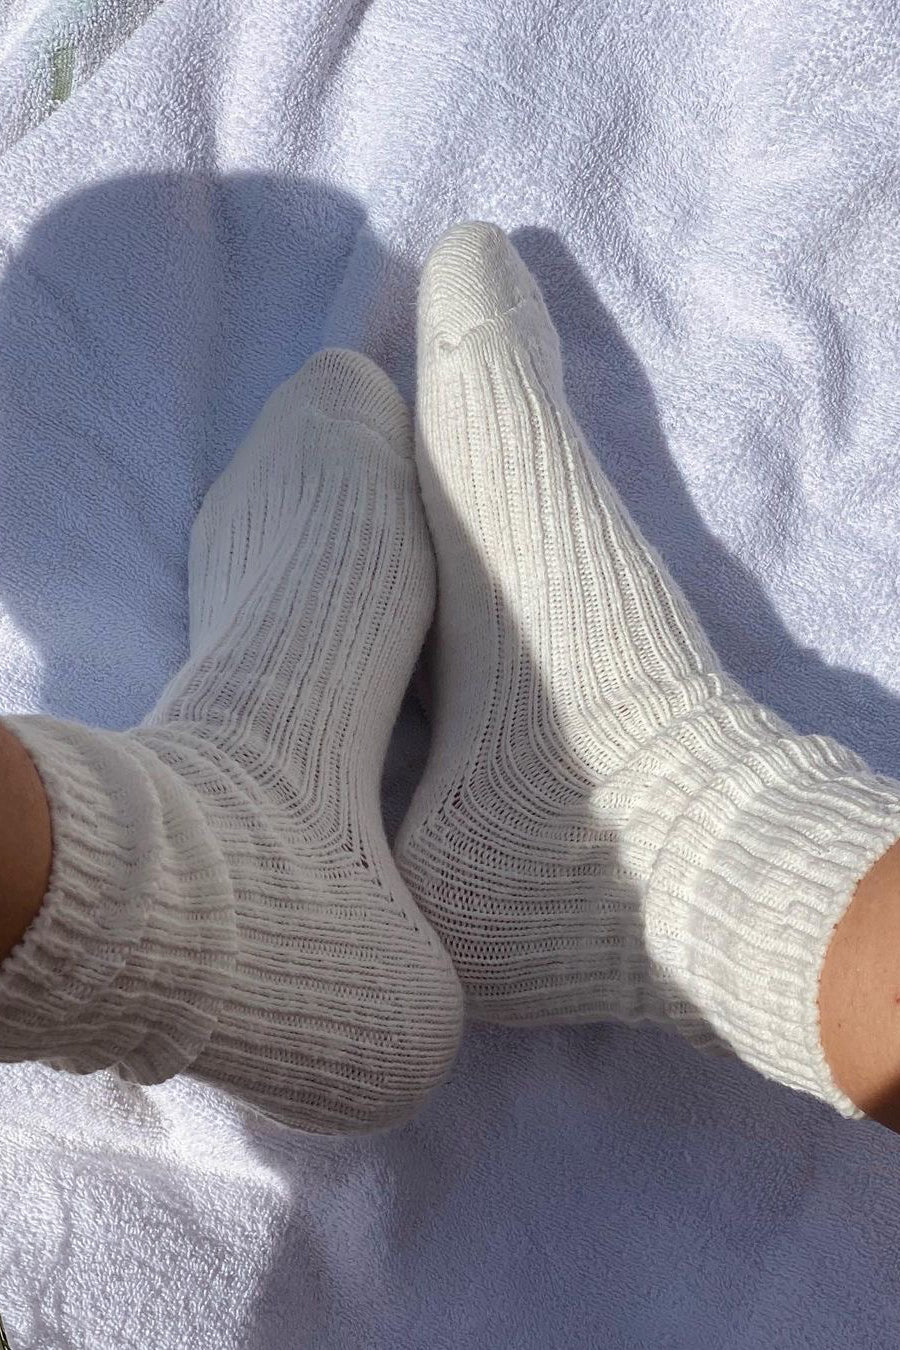 Cottage Socks In White Linen By Le Bon Shoppe